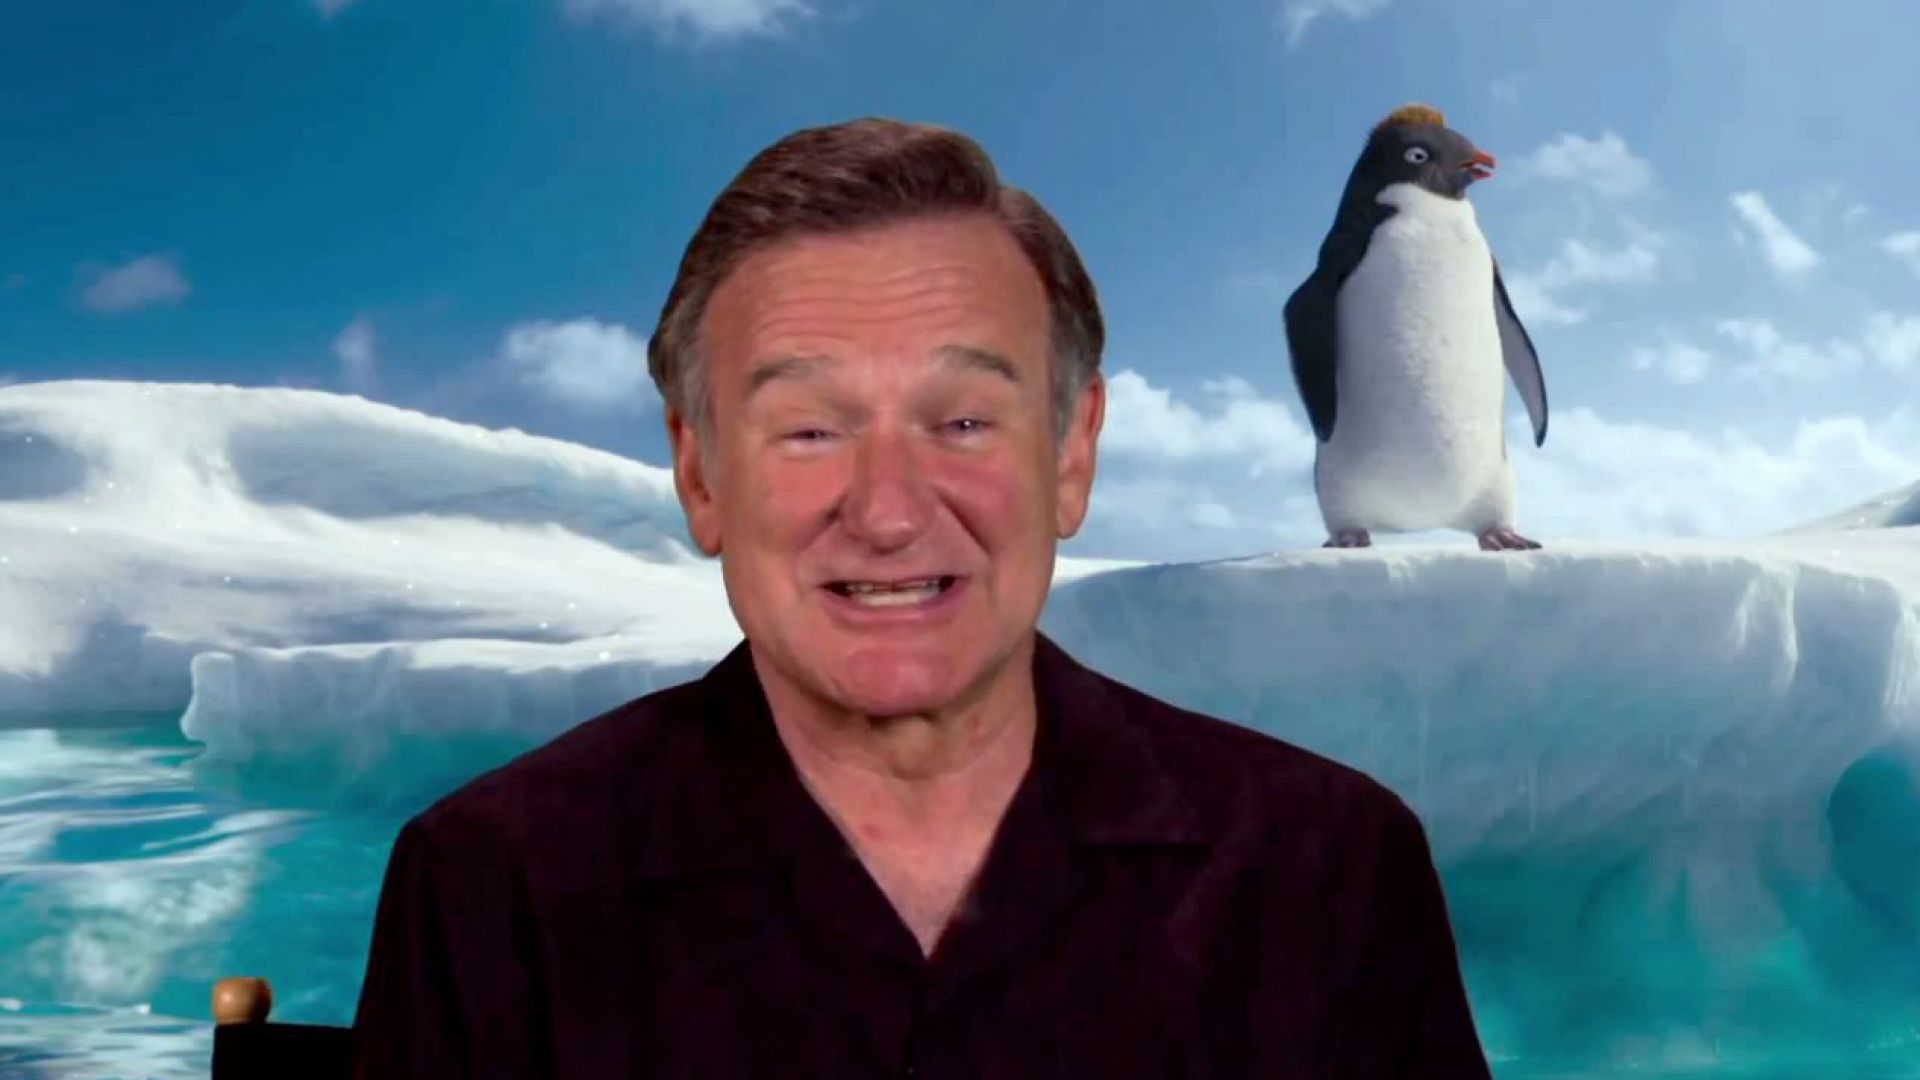 Robin Williams on playing the hopeless romantic Ramon in Happy Feet 2